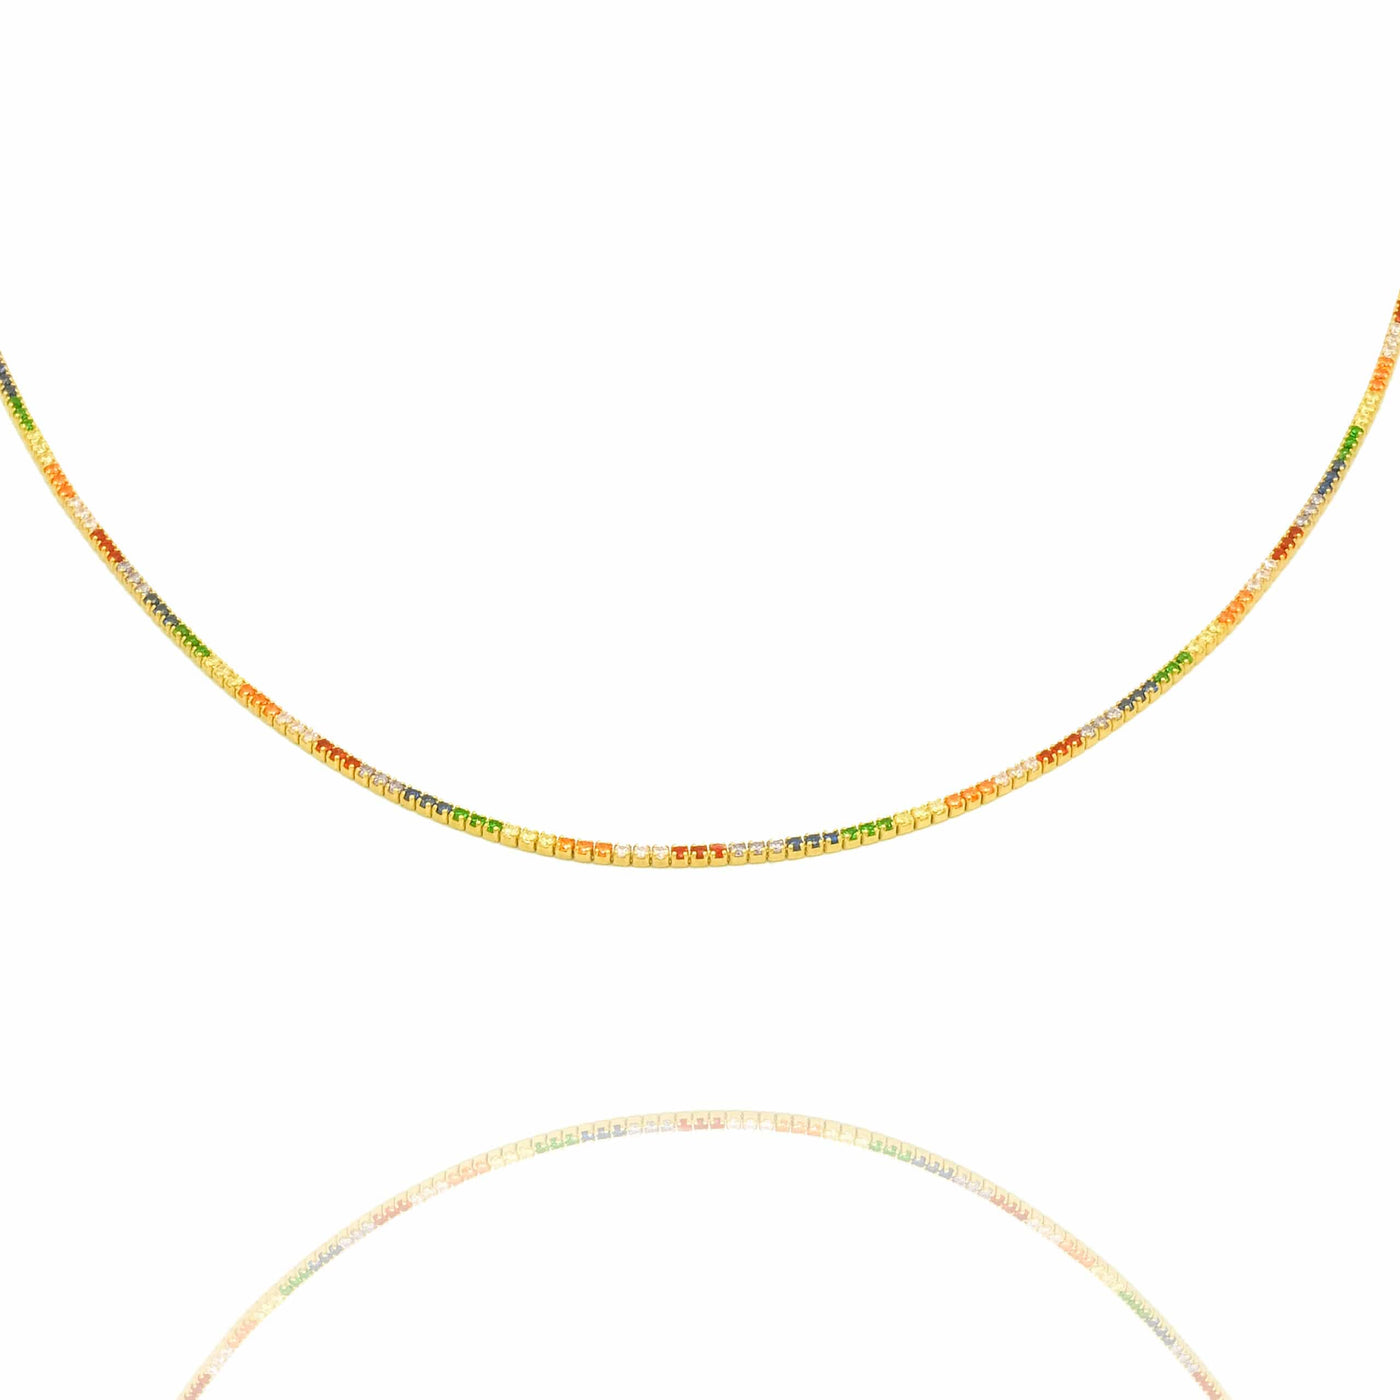 Full Chain Rainbow Halskette